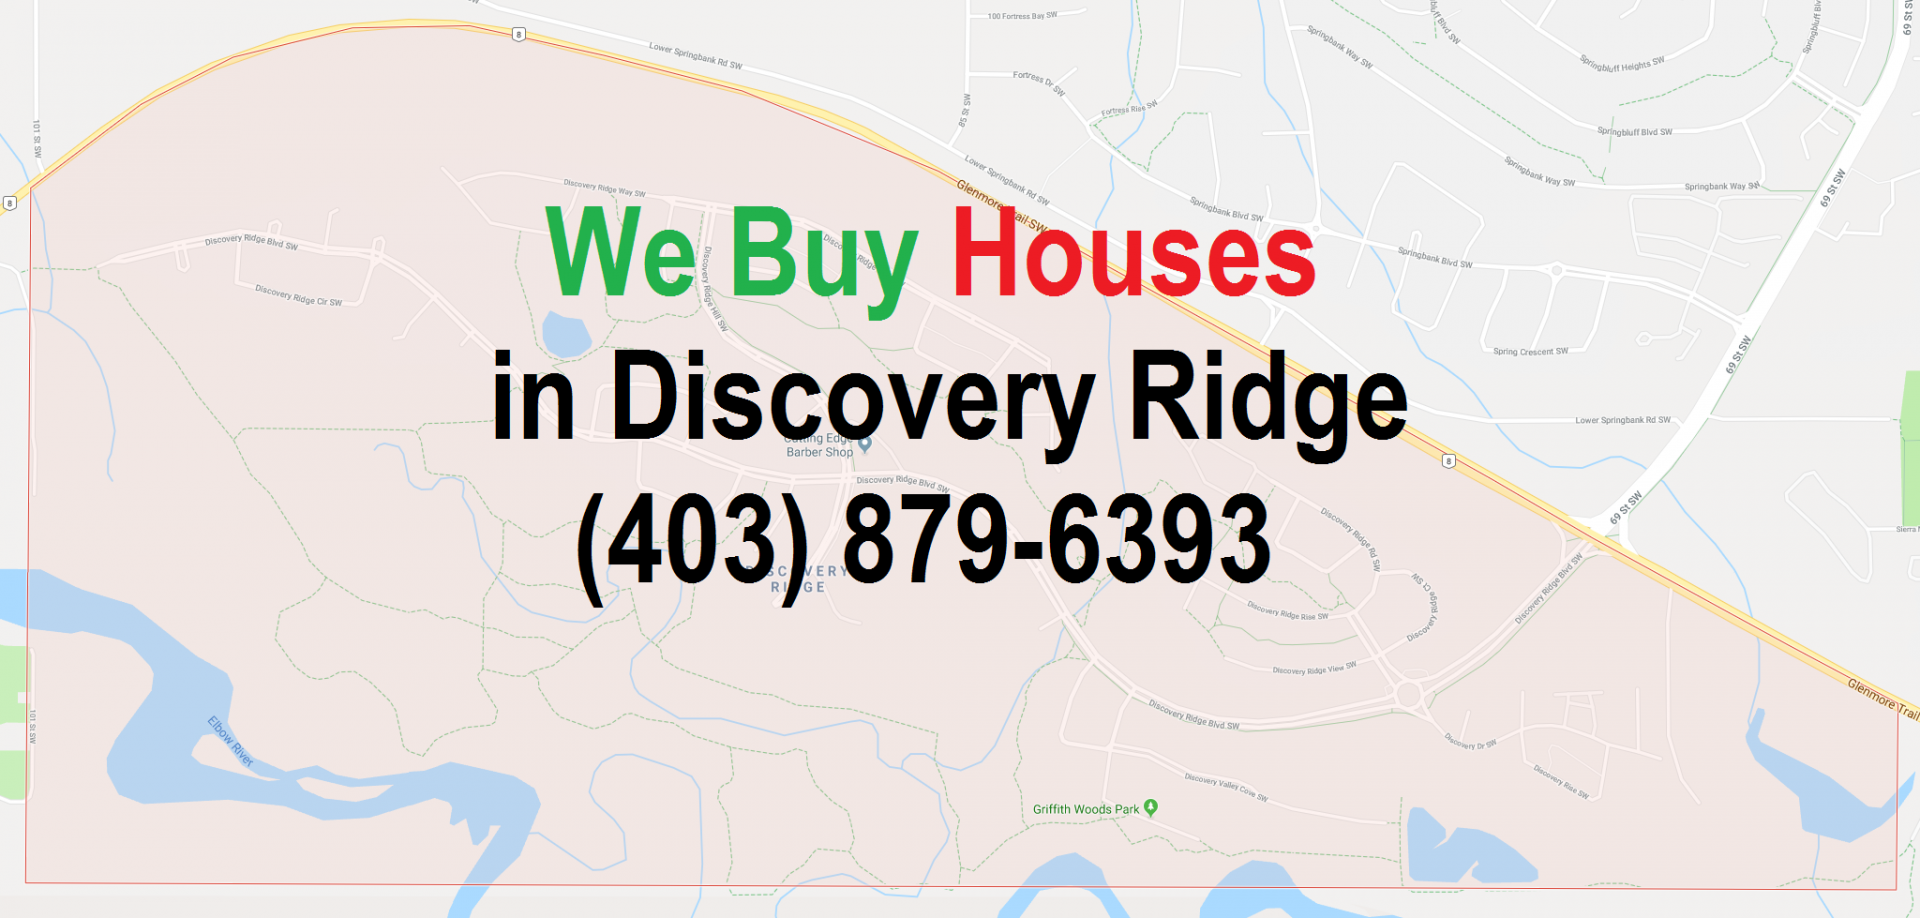 We Buy Houses Discovery Ridge Calgary